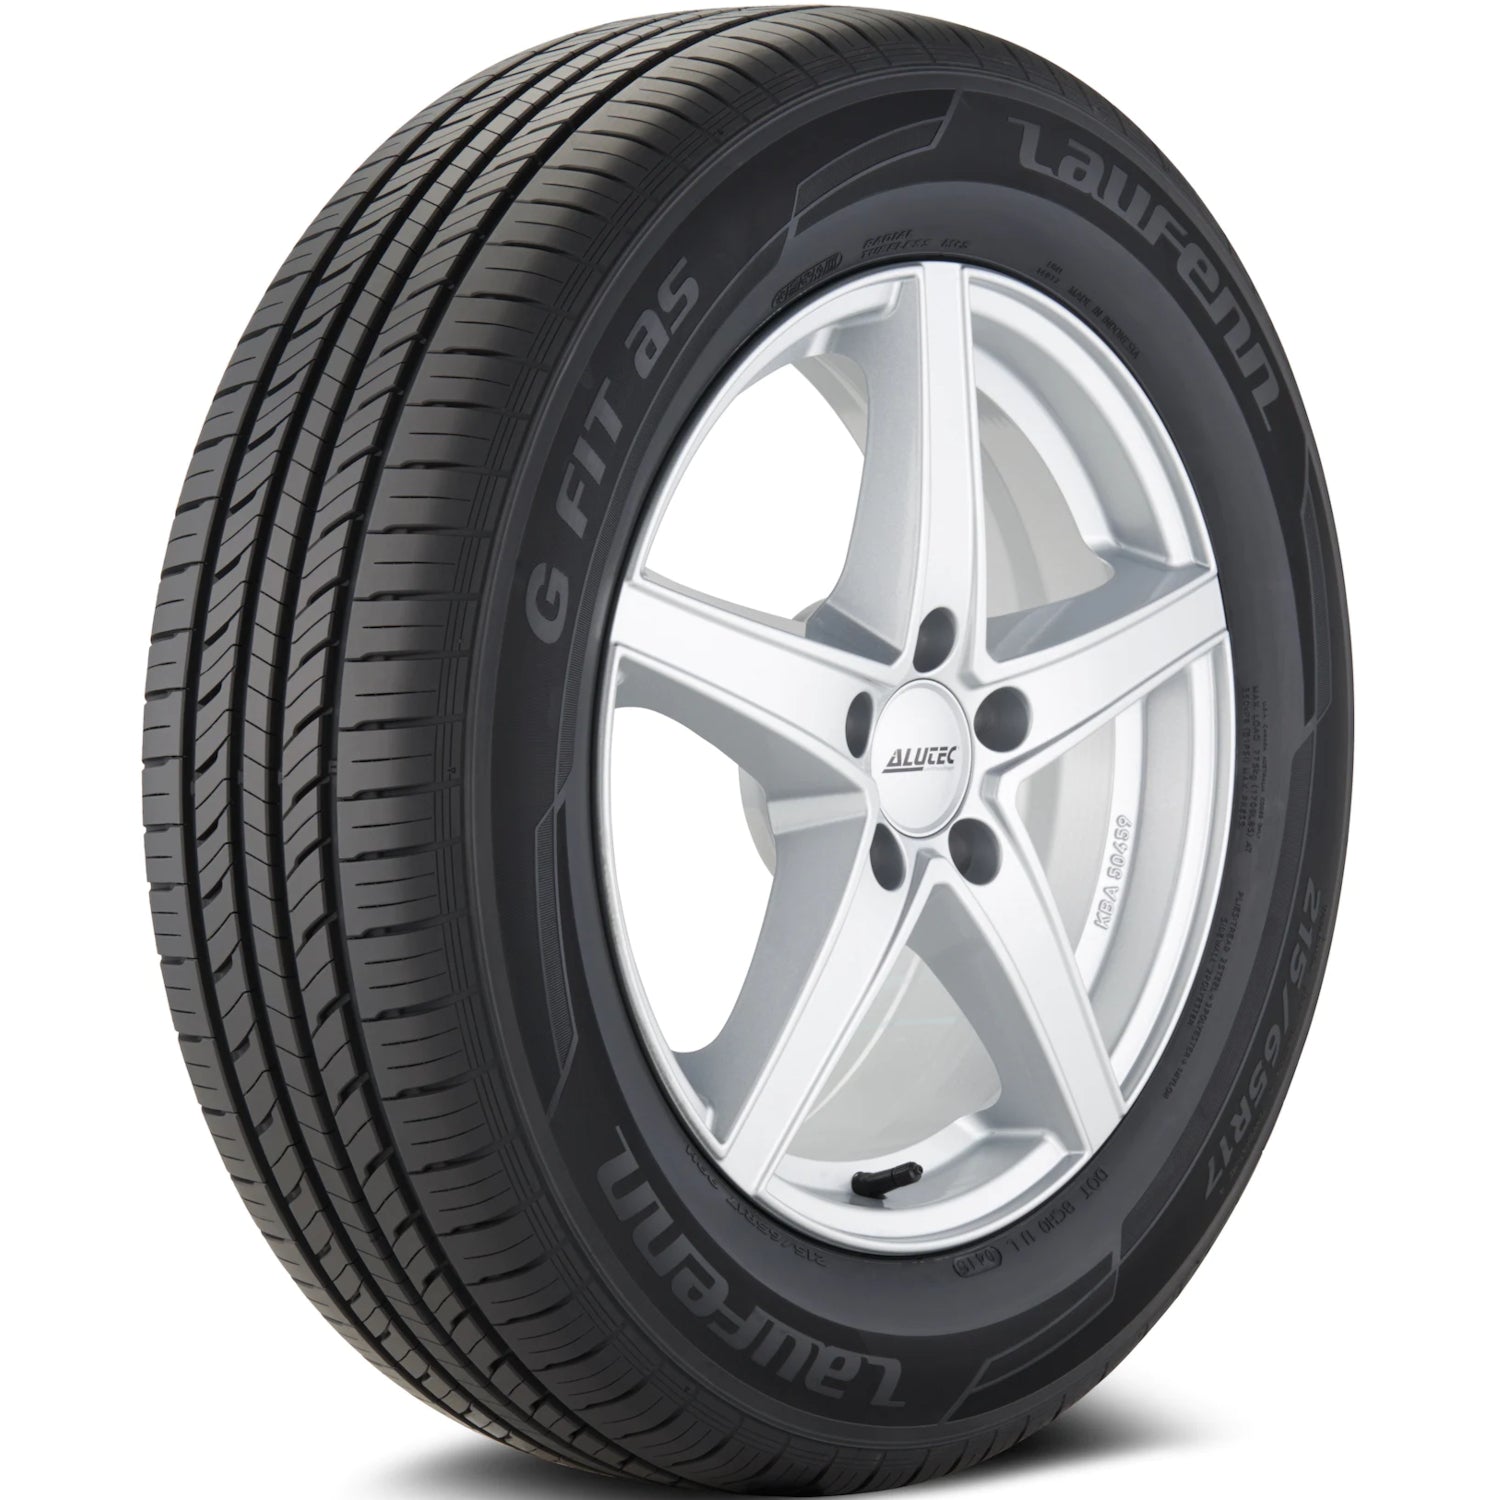 LAUFENN G FIT AS 185/55R16 (24X7.3R 16) Tires